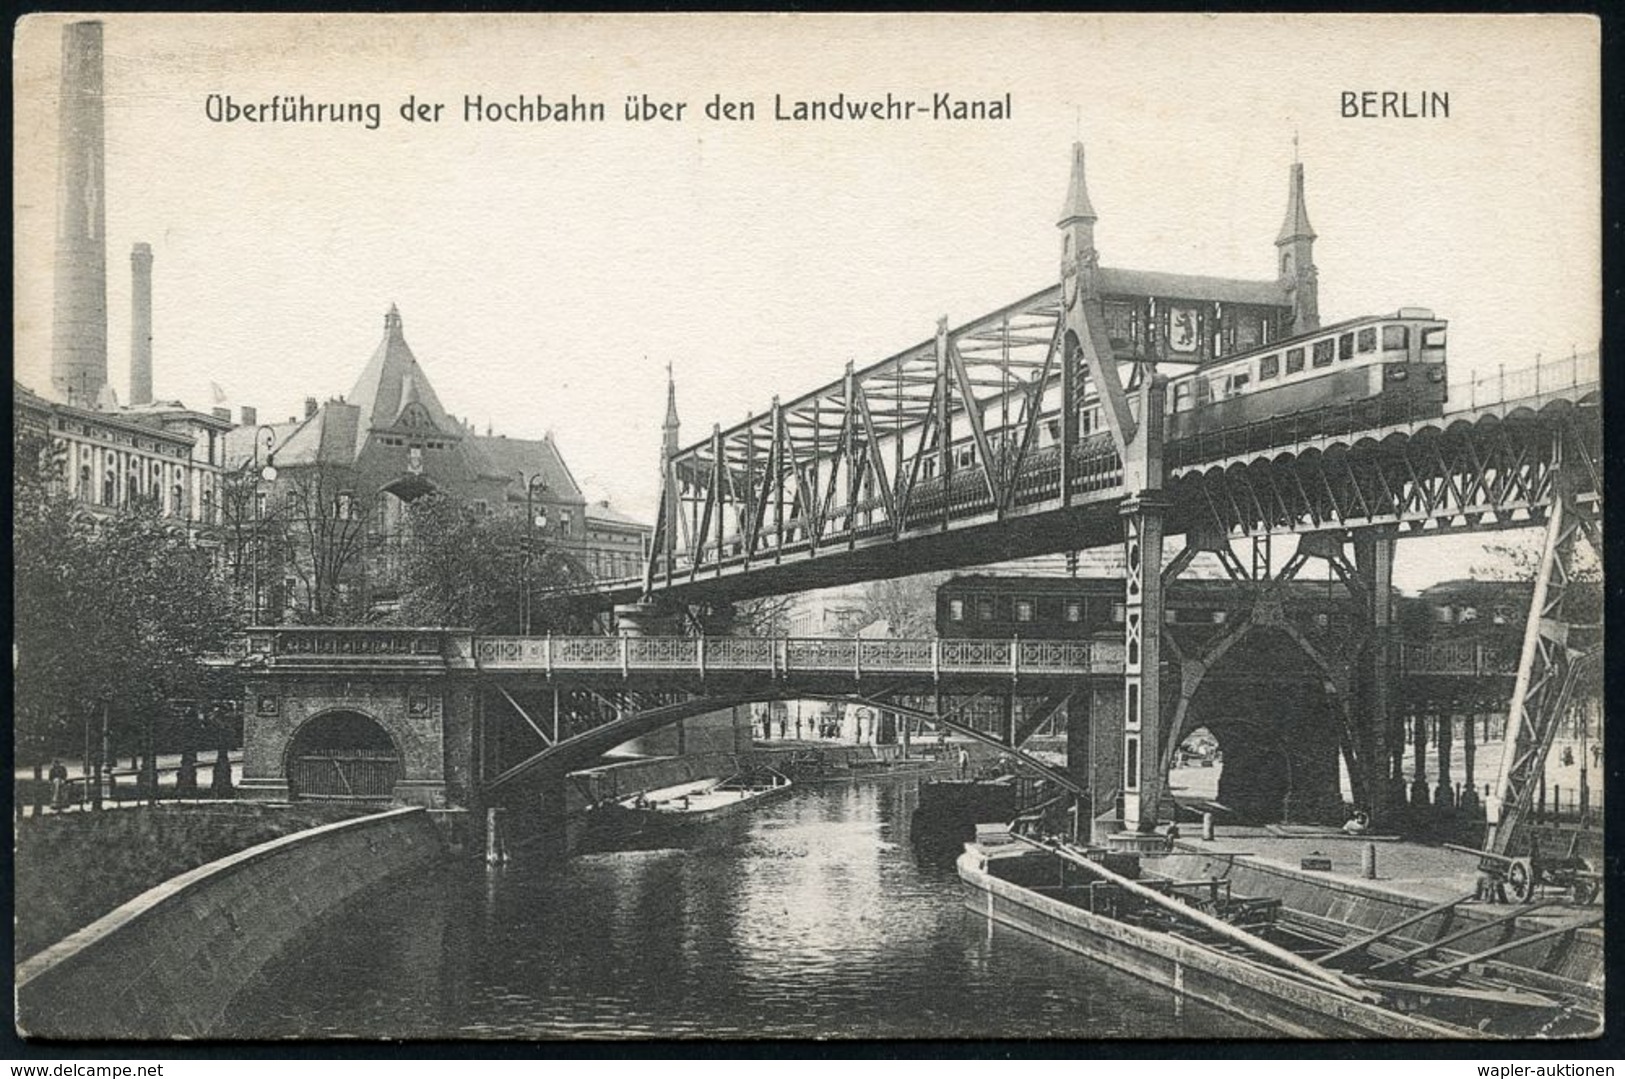 UNTERGRUNDBAHN /U-BAHN : Berlin-Kreuzberg 1907/25 U-Bahn Landwehrkanal/Anhalter Bhf., 13 verschiedene s/w.-Foto-Ak. , me